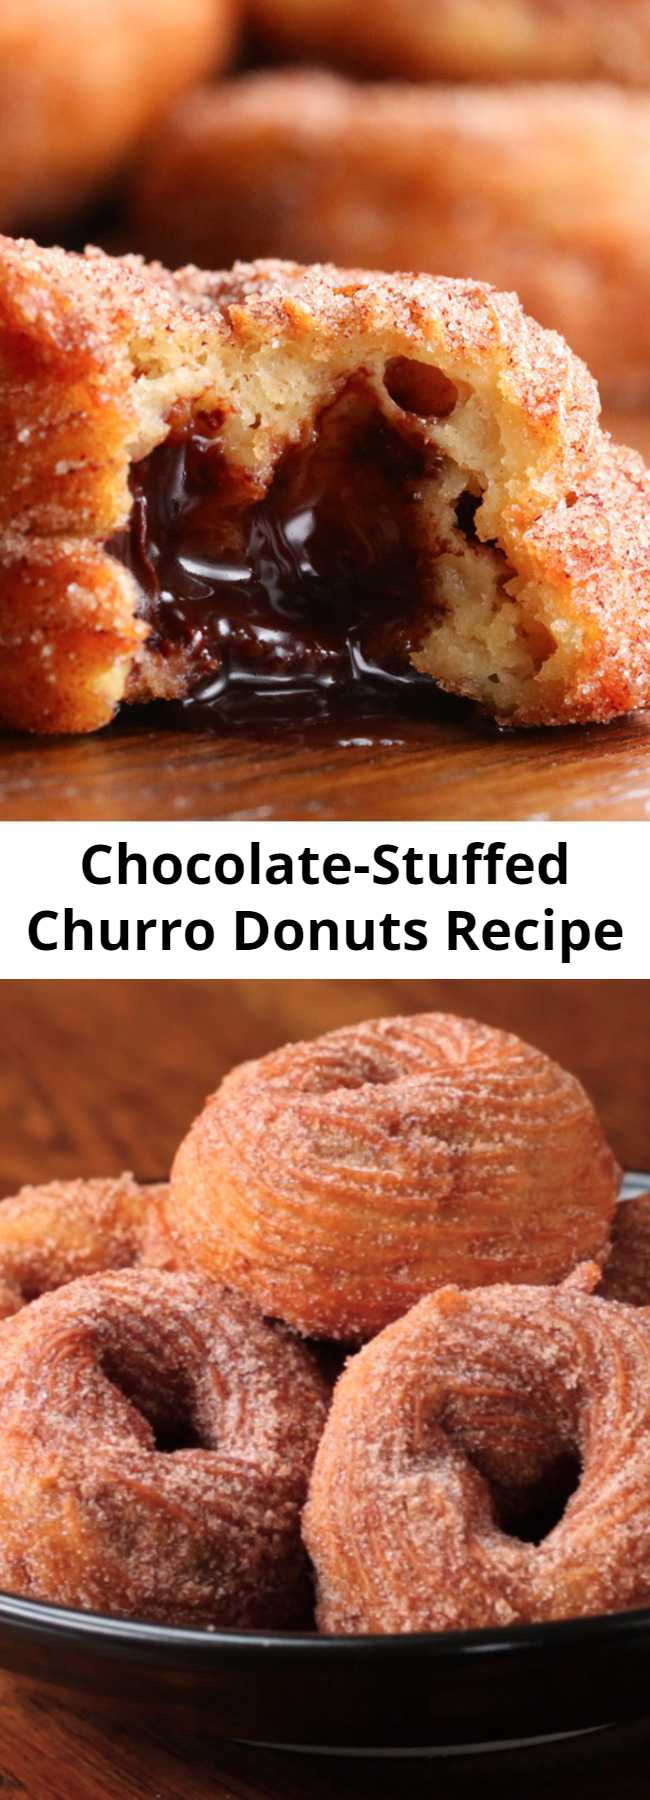 Chocolate-Stuffed Churro Donuts Recipe - This is a super cool recipe. Super fun and delicious 😋